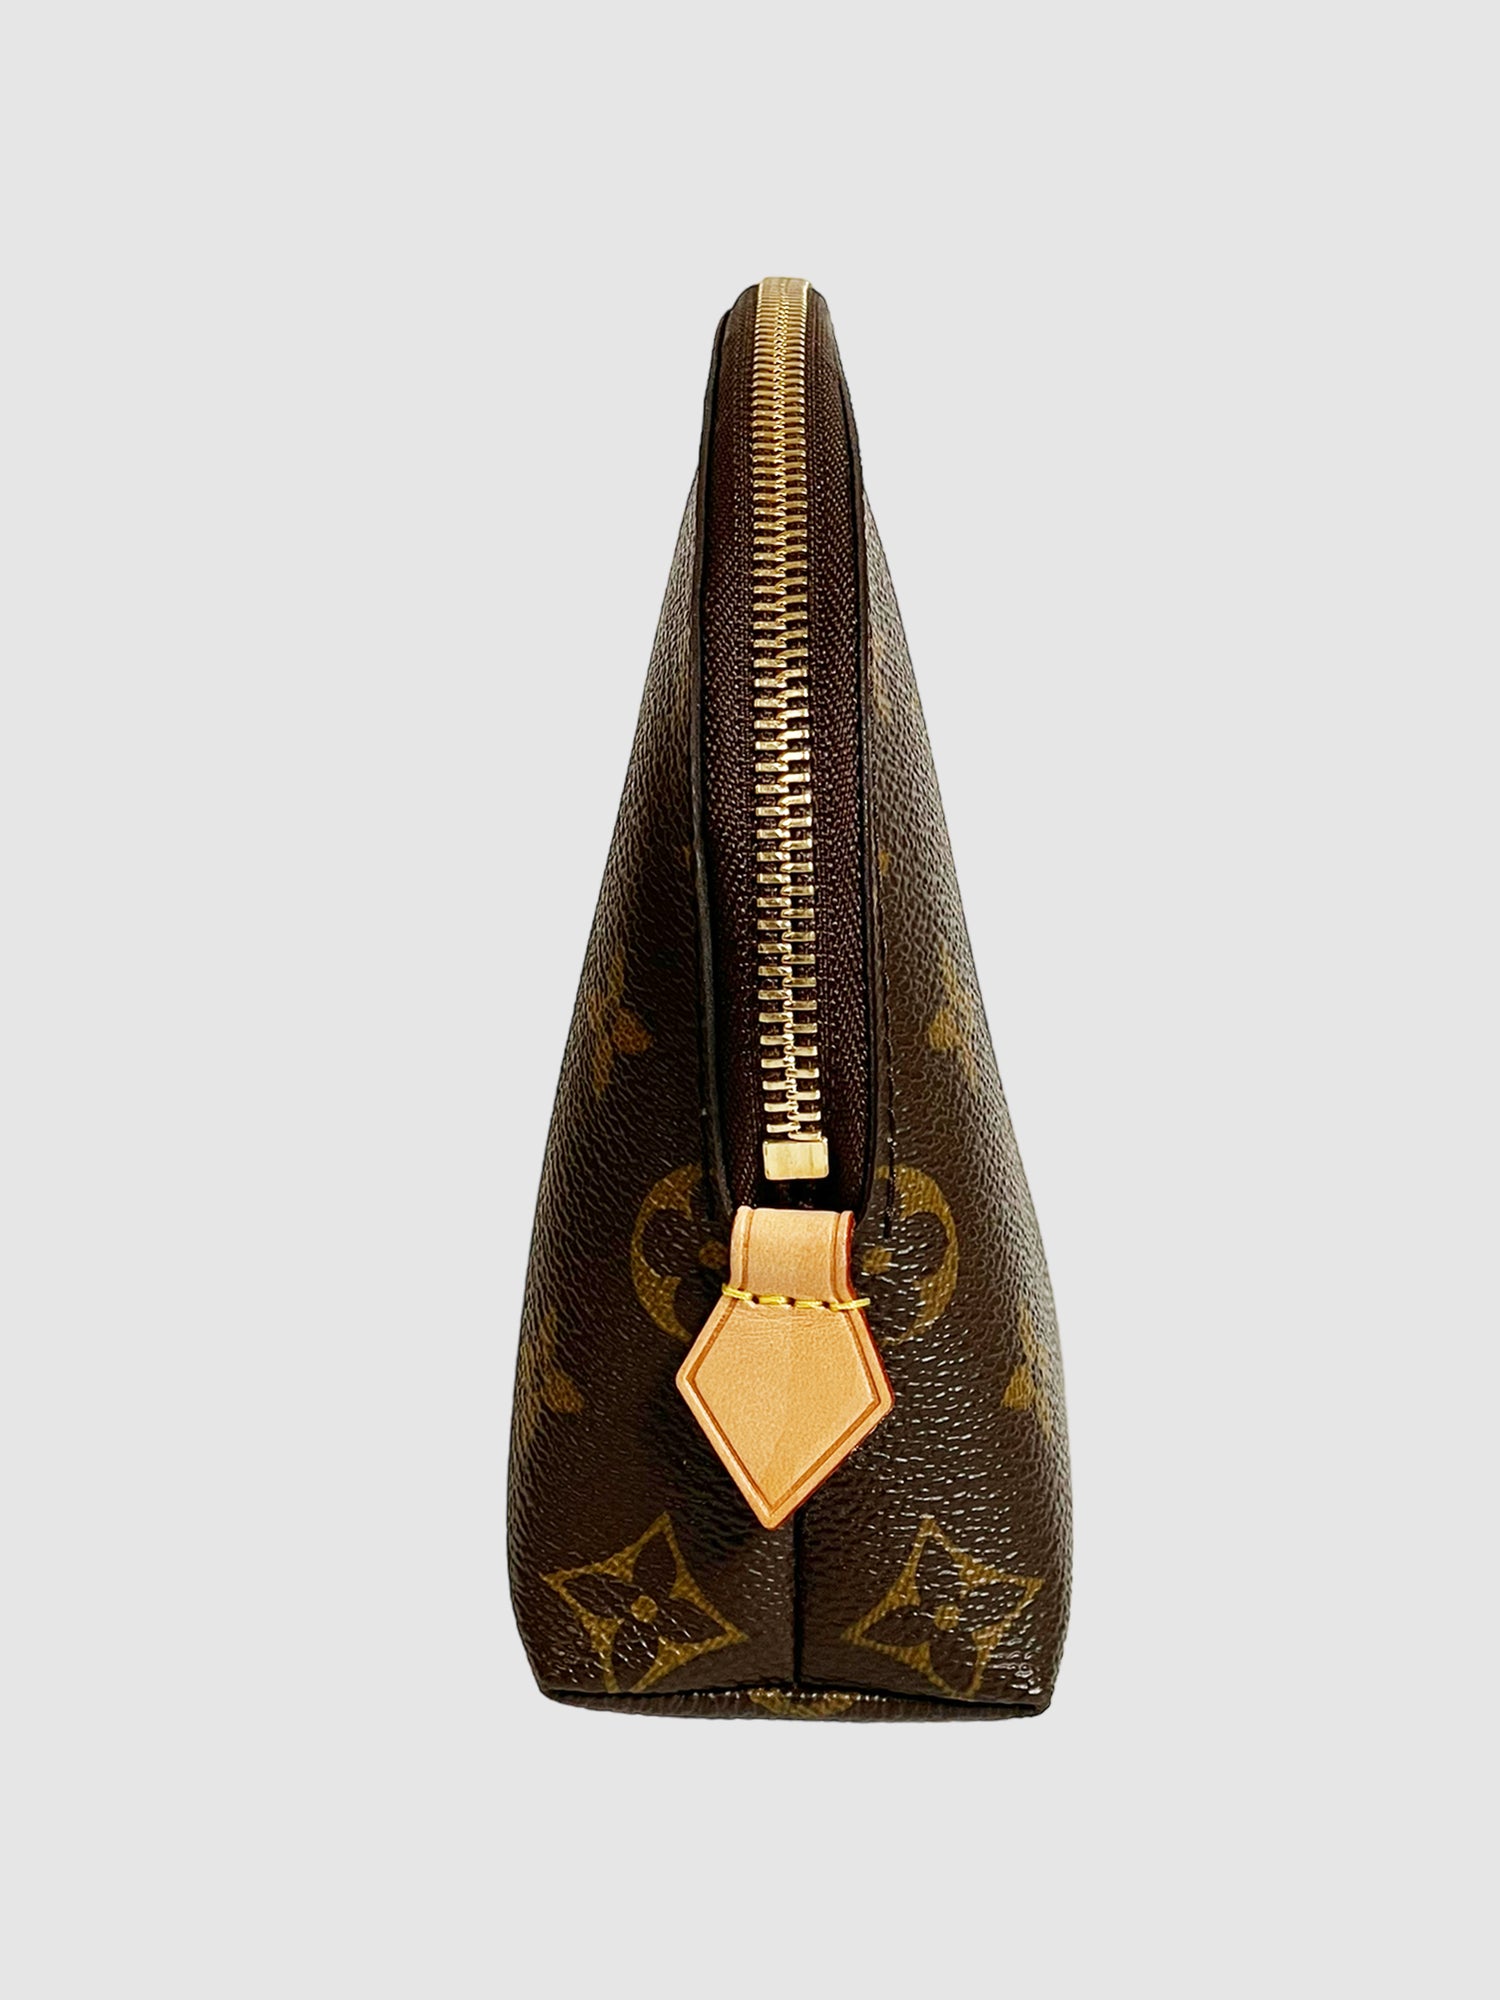 Louis Vuitton Makeup Bag Canada 7937